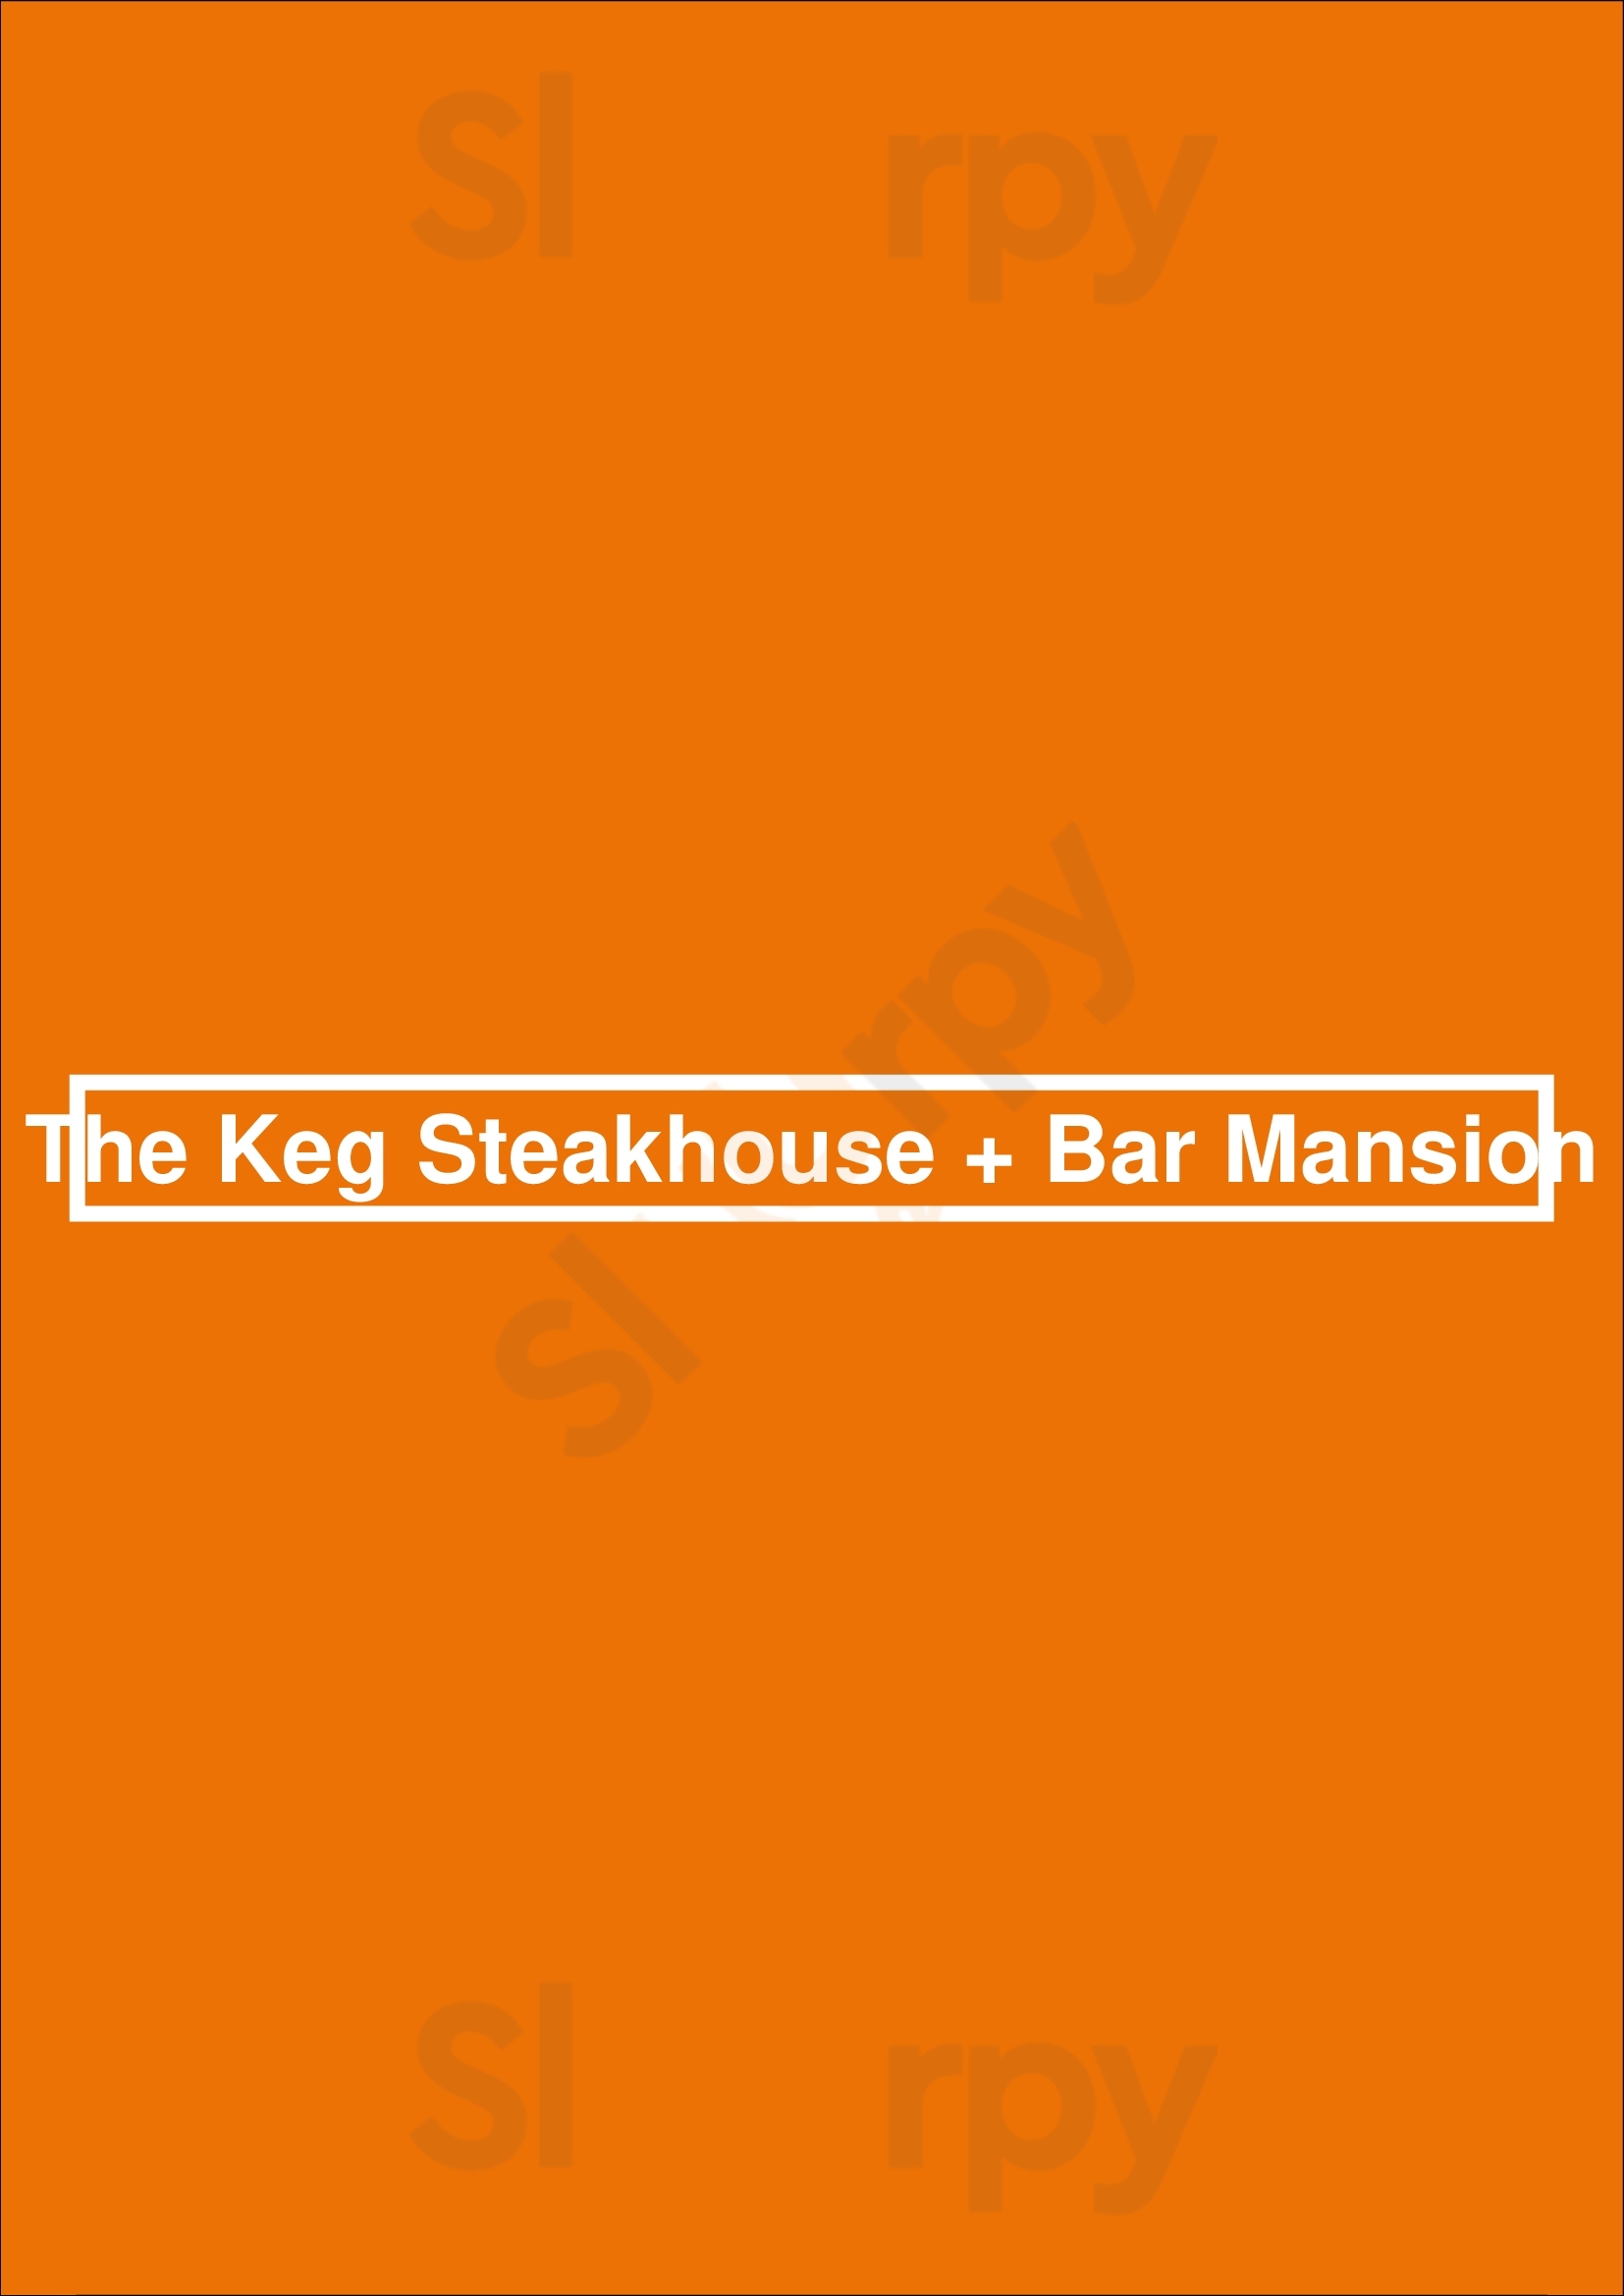 The Keg Steakhouse + Bar - Mansion Toronto Menu - 1